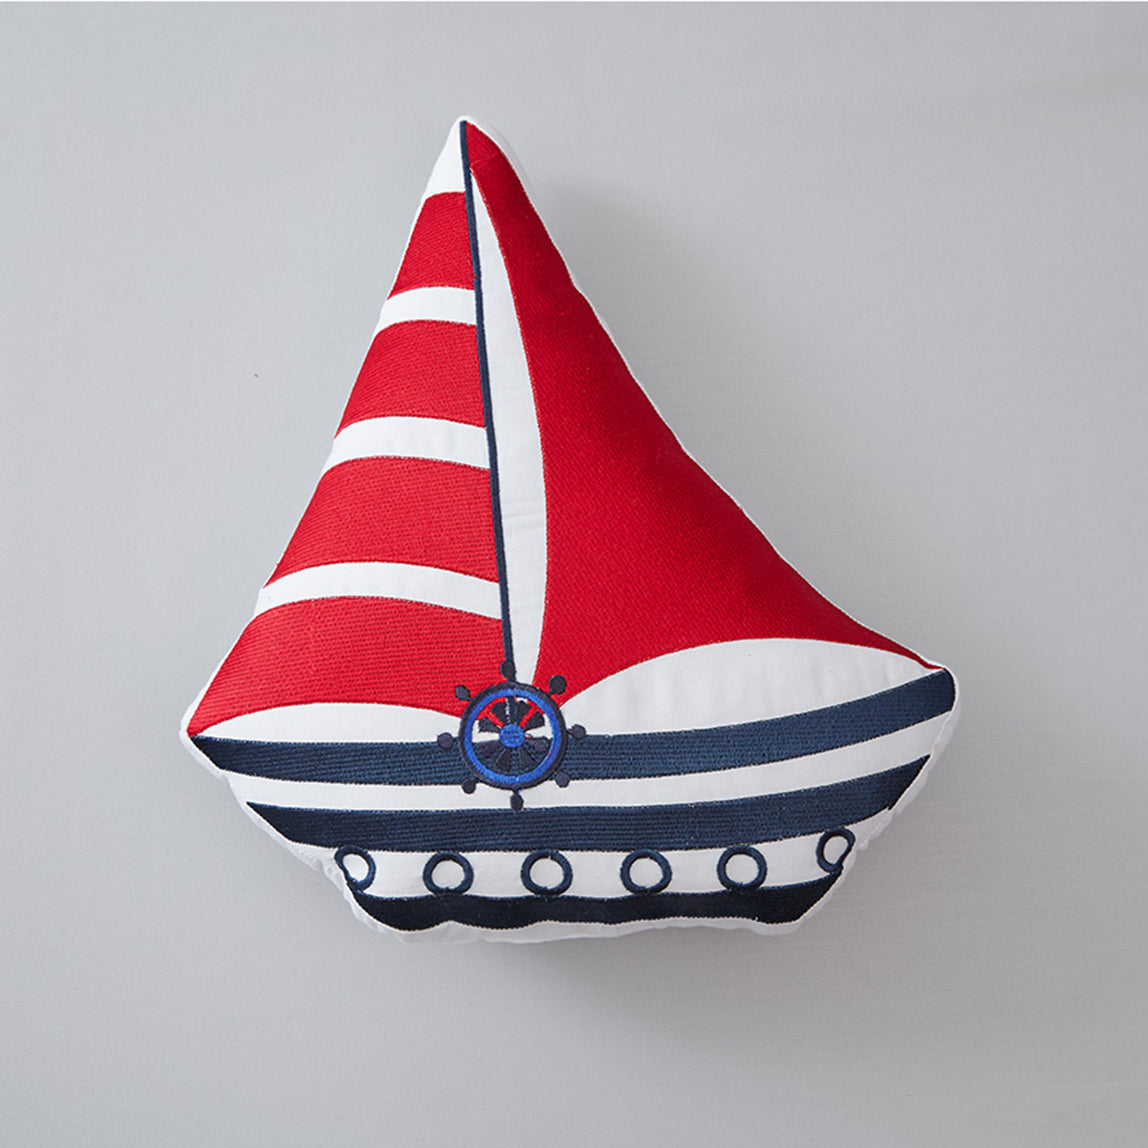 Sail Boat Cushion (Ship Cushion)